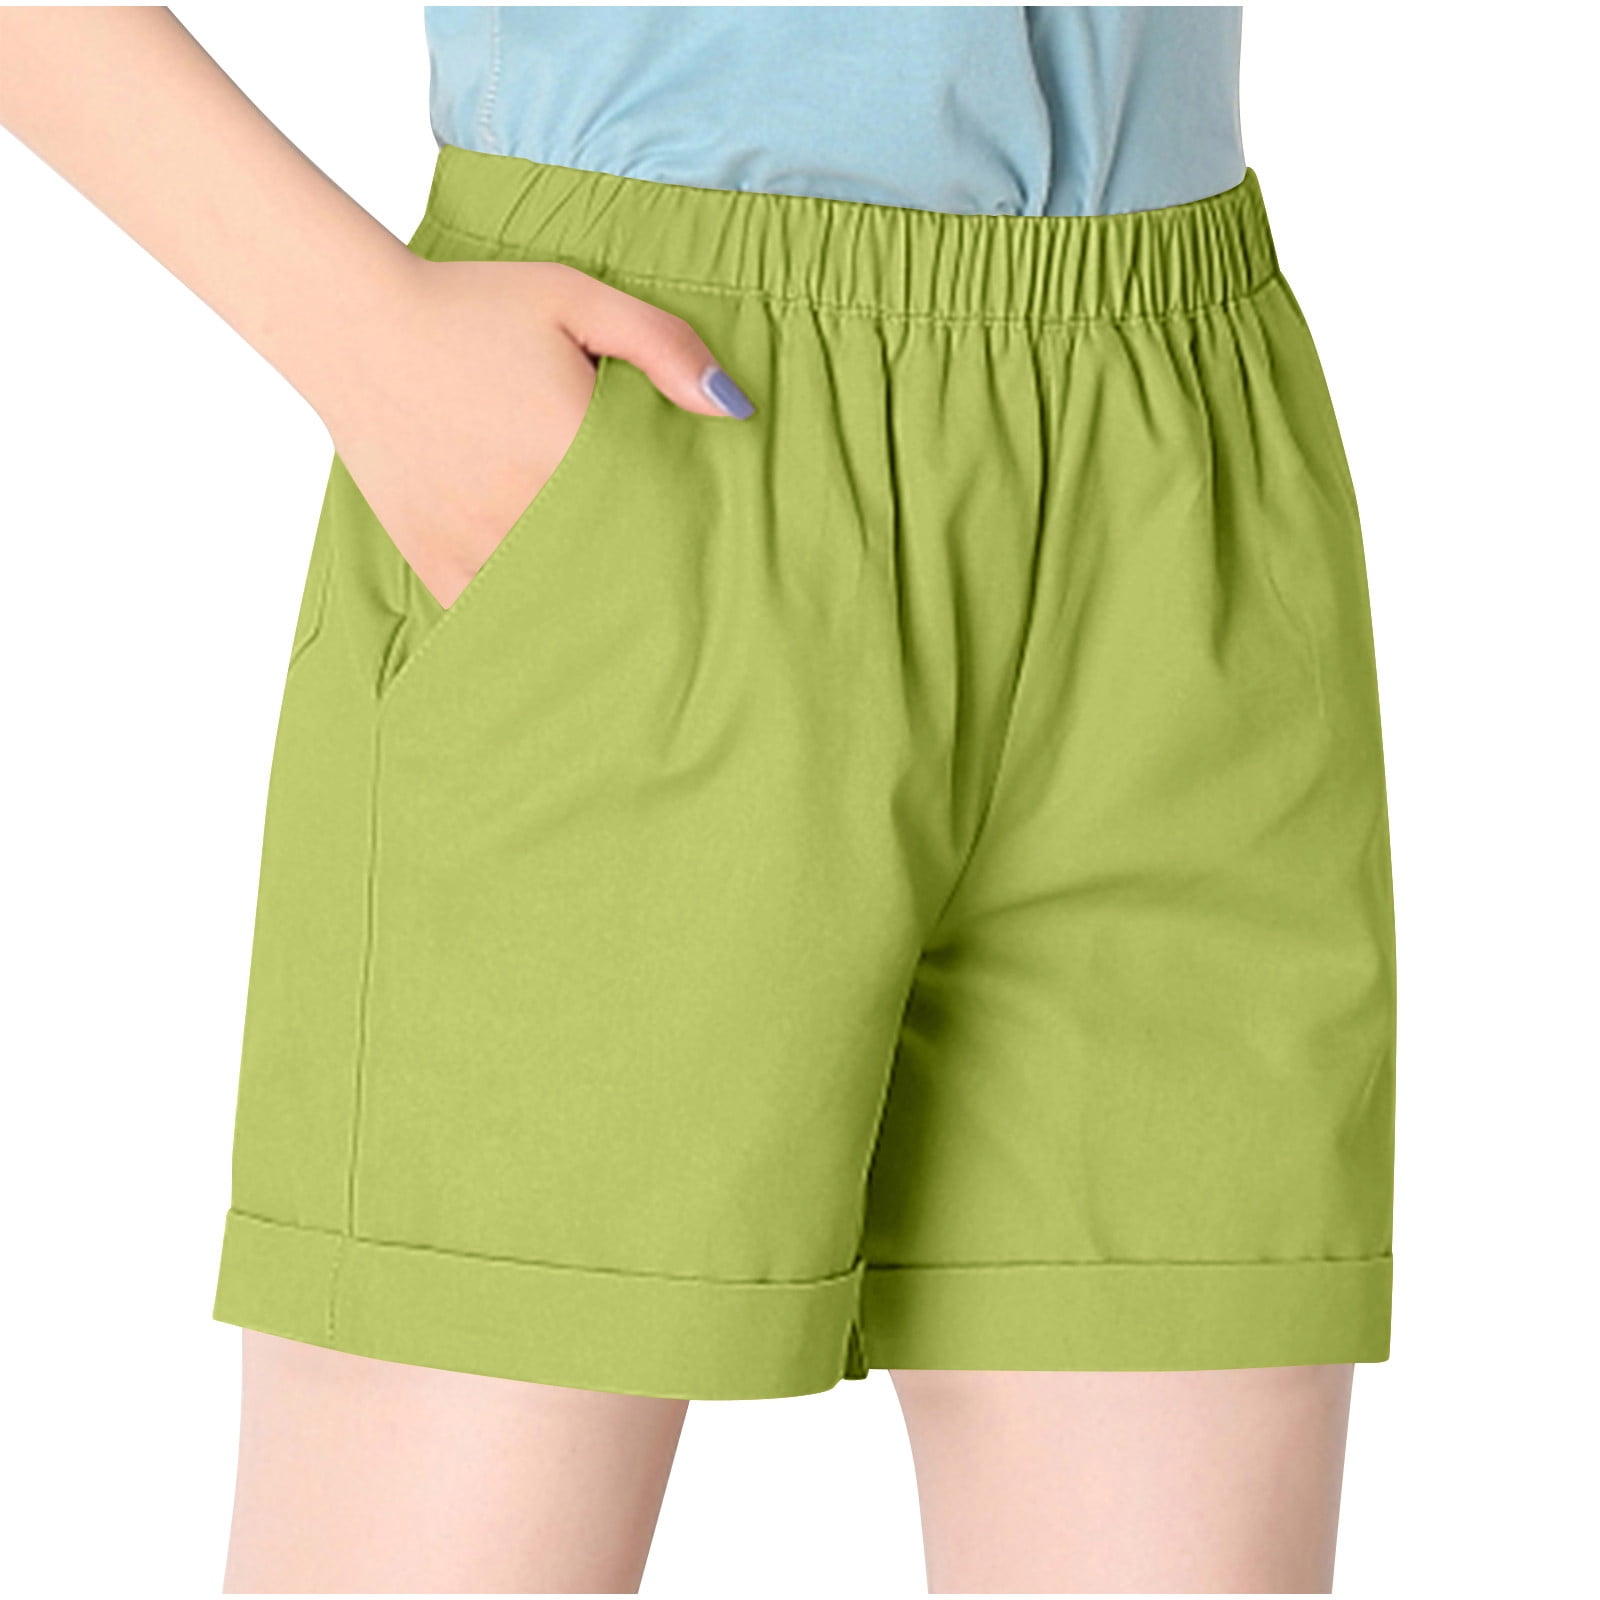 Women's Casual Shorts Elastic Waist Shorts Pants Ladies Shorts Summer ...